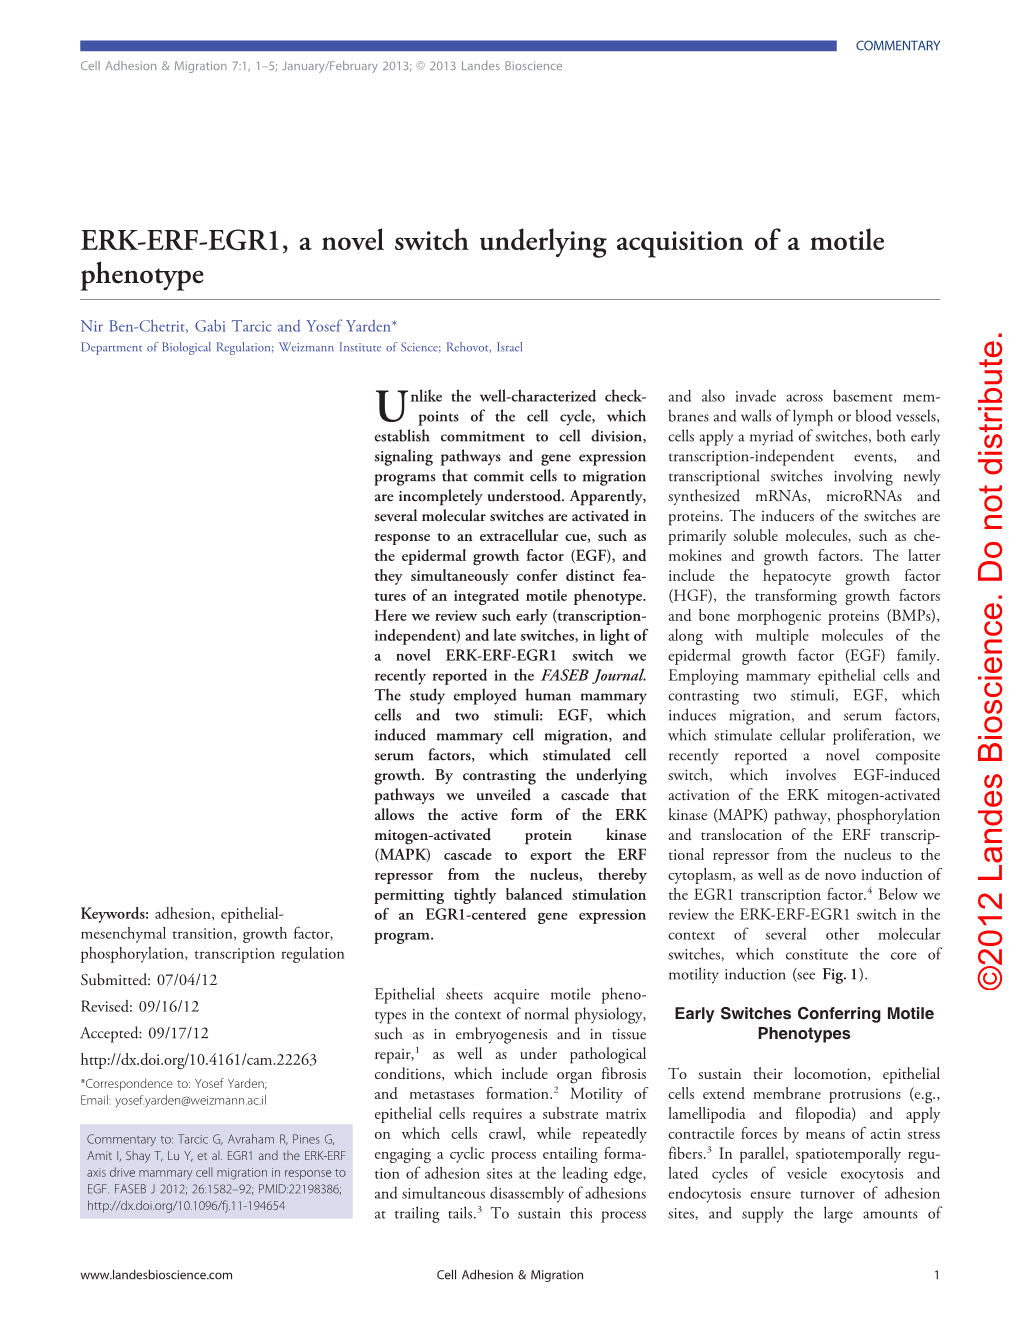 ERK-ERF-EGR1, a Novel Switch Underlying Acquisition of a Motile